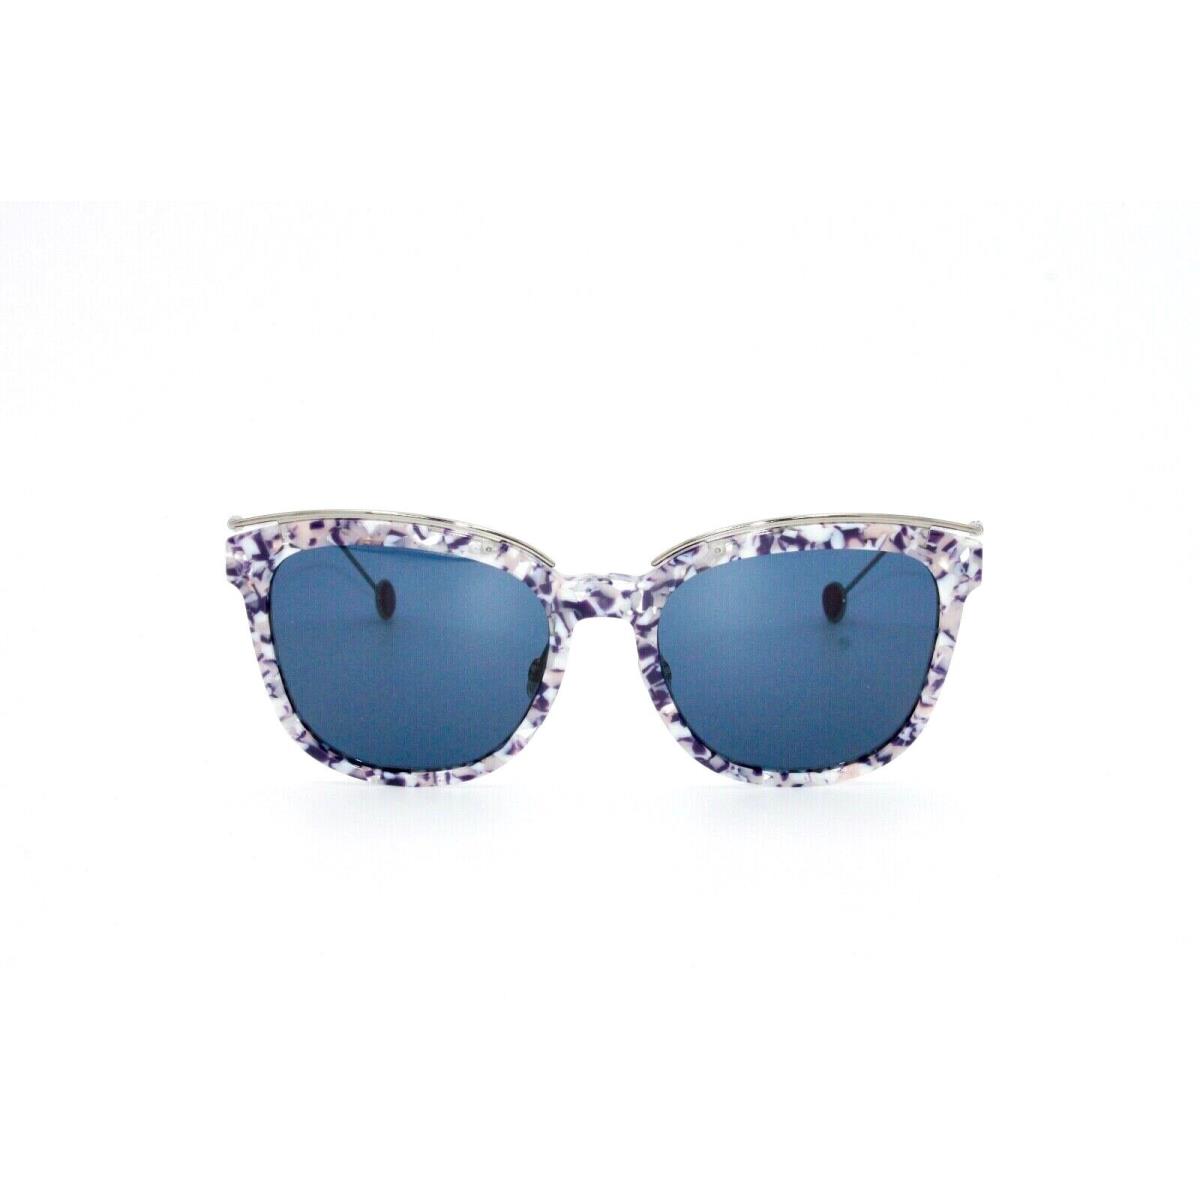 Christian Dior Sunglasses Diorblossomf Gkrku 54-19 145 Made in Italy - Multicolor Frame, Blue Lens